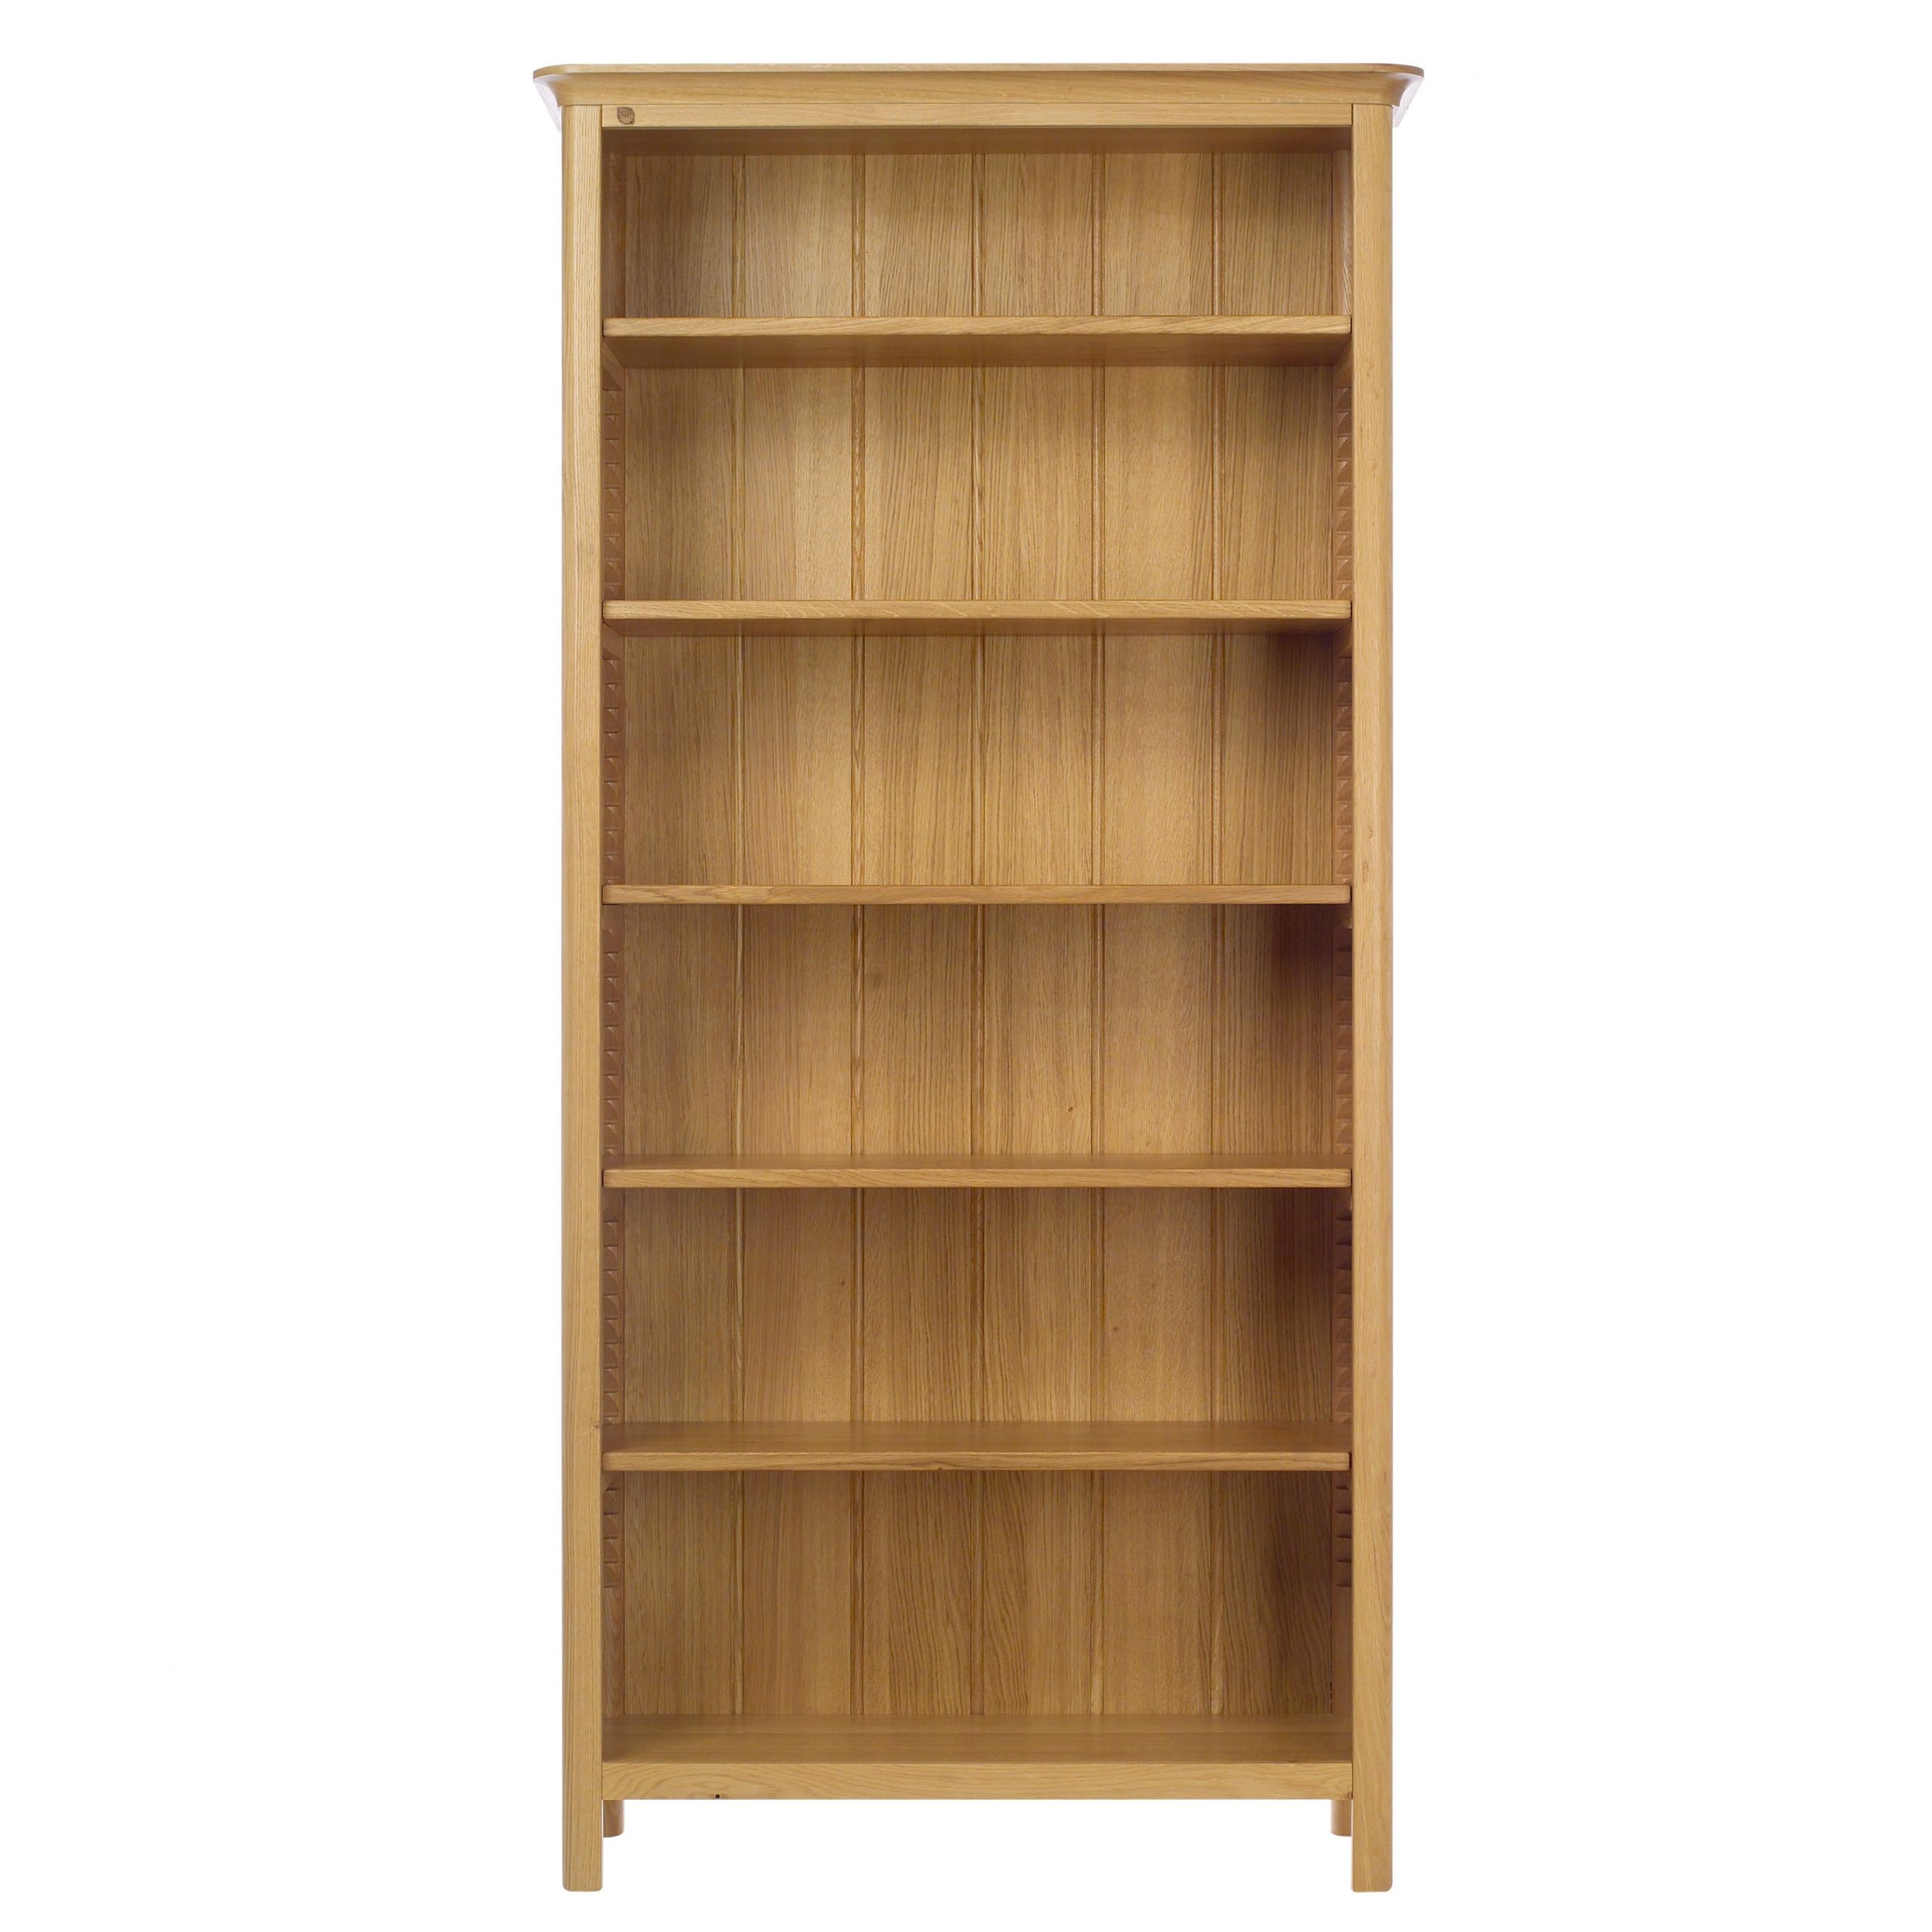 Narrow Depth Bookcase Adjustable Bookshelf Narrow Low with regard to measurements 3686 X 3686